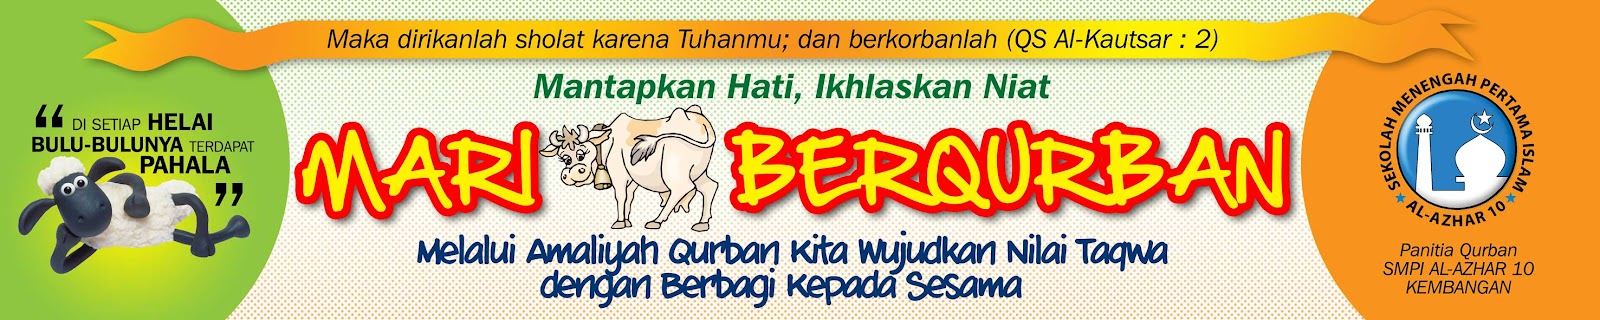 Contoh Spanduk Iedul Qurban  www.InfoPercetakan.com